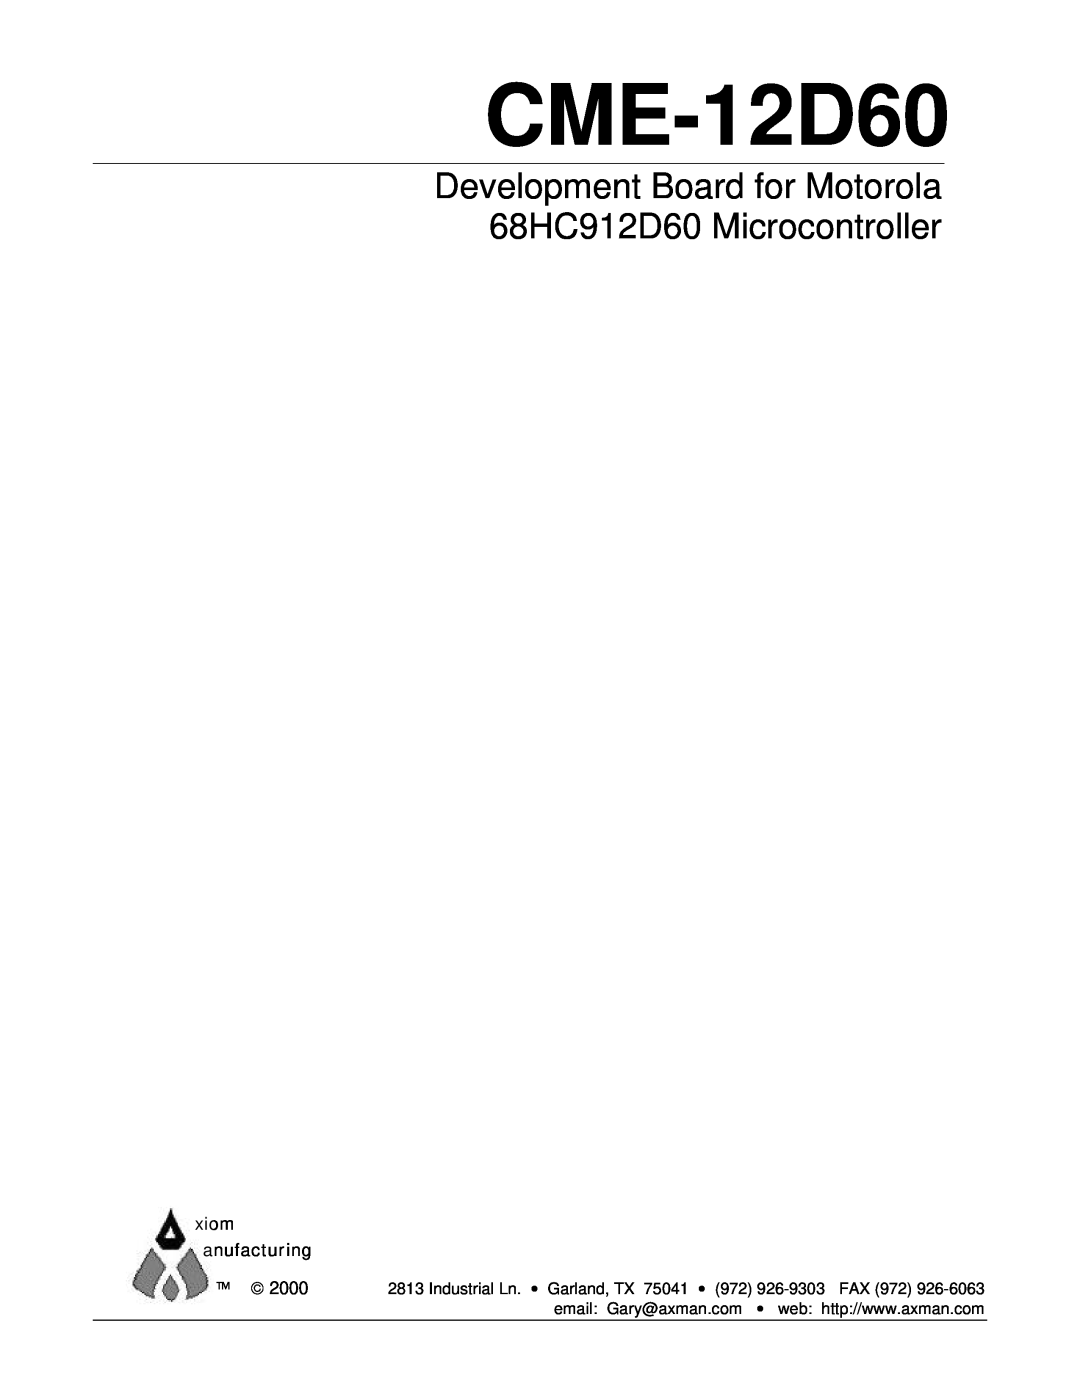 Motorola CME-12D60 manual Development Board for Motorola 68HC912D60 Microcontroller, xiom anufacturing 